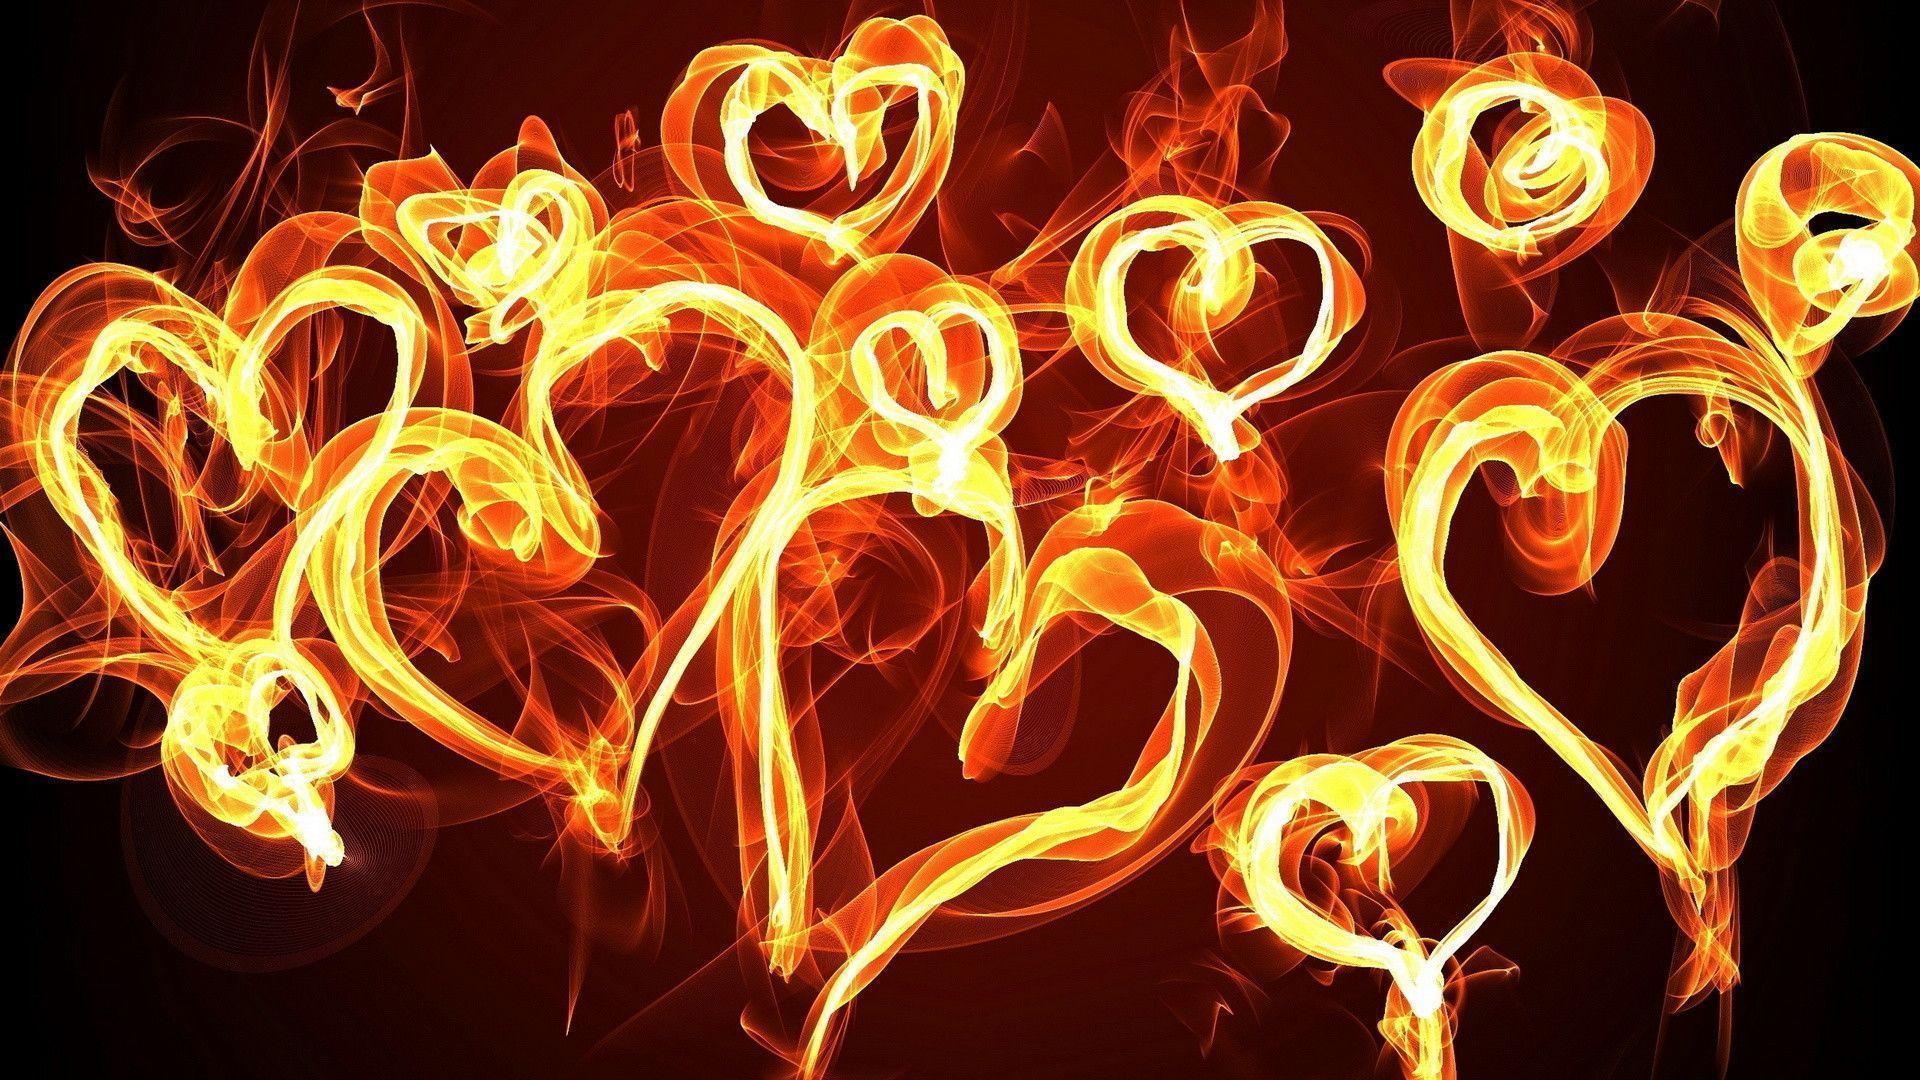 Abstract Flames Love Romance Heart Bright Cg Digital Art Free